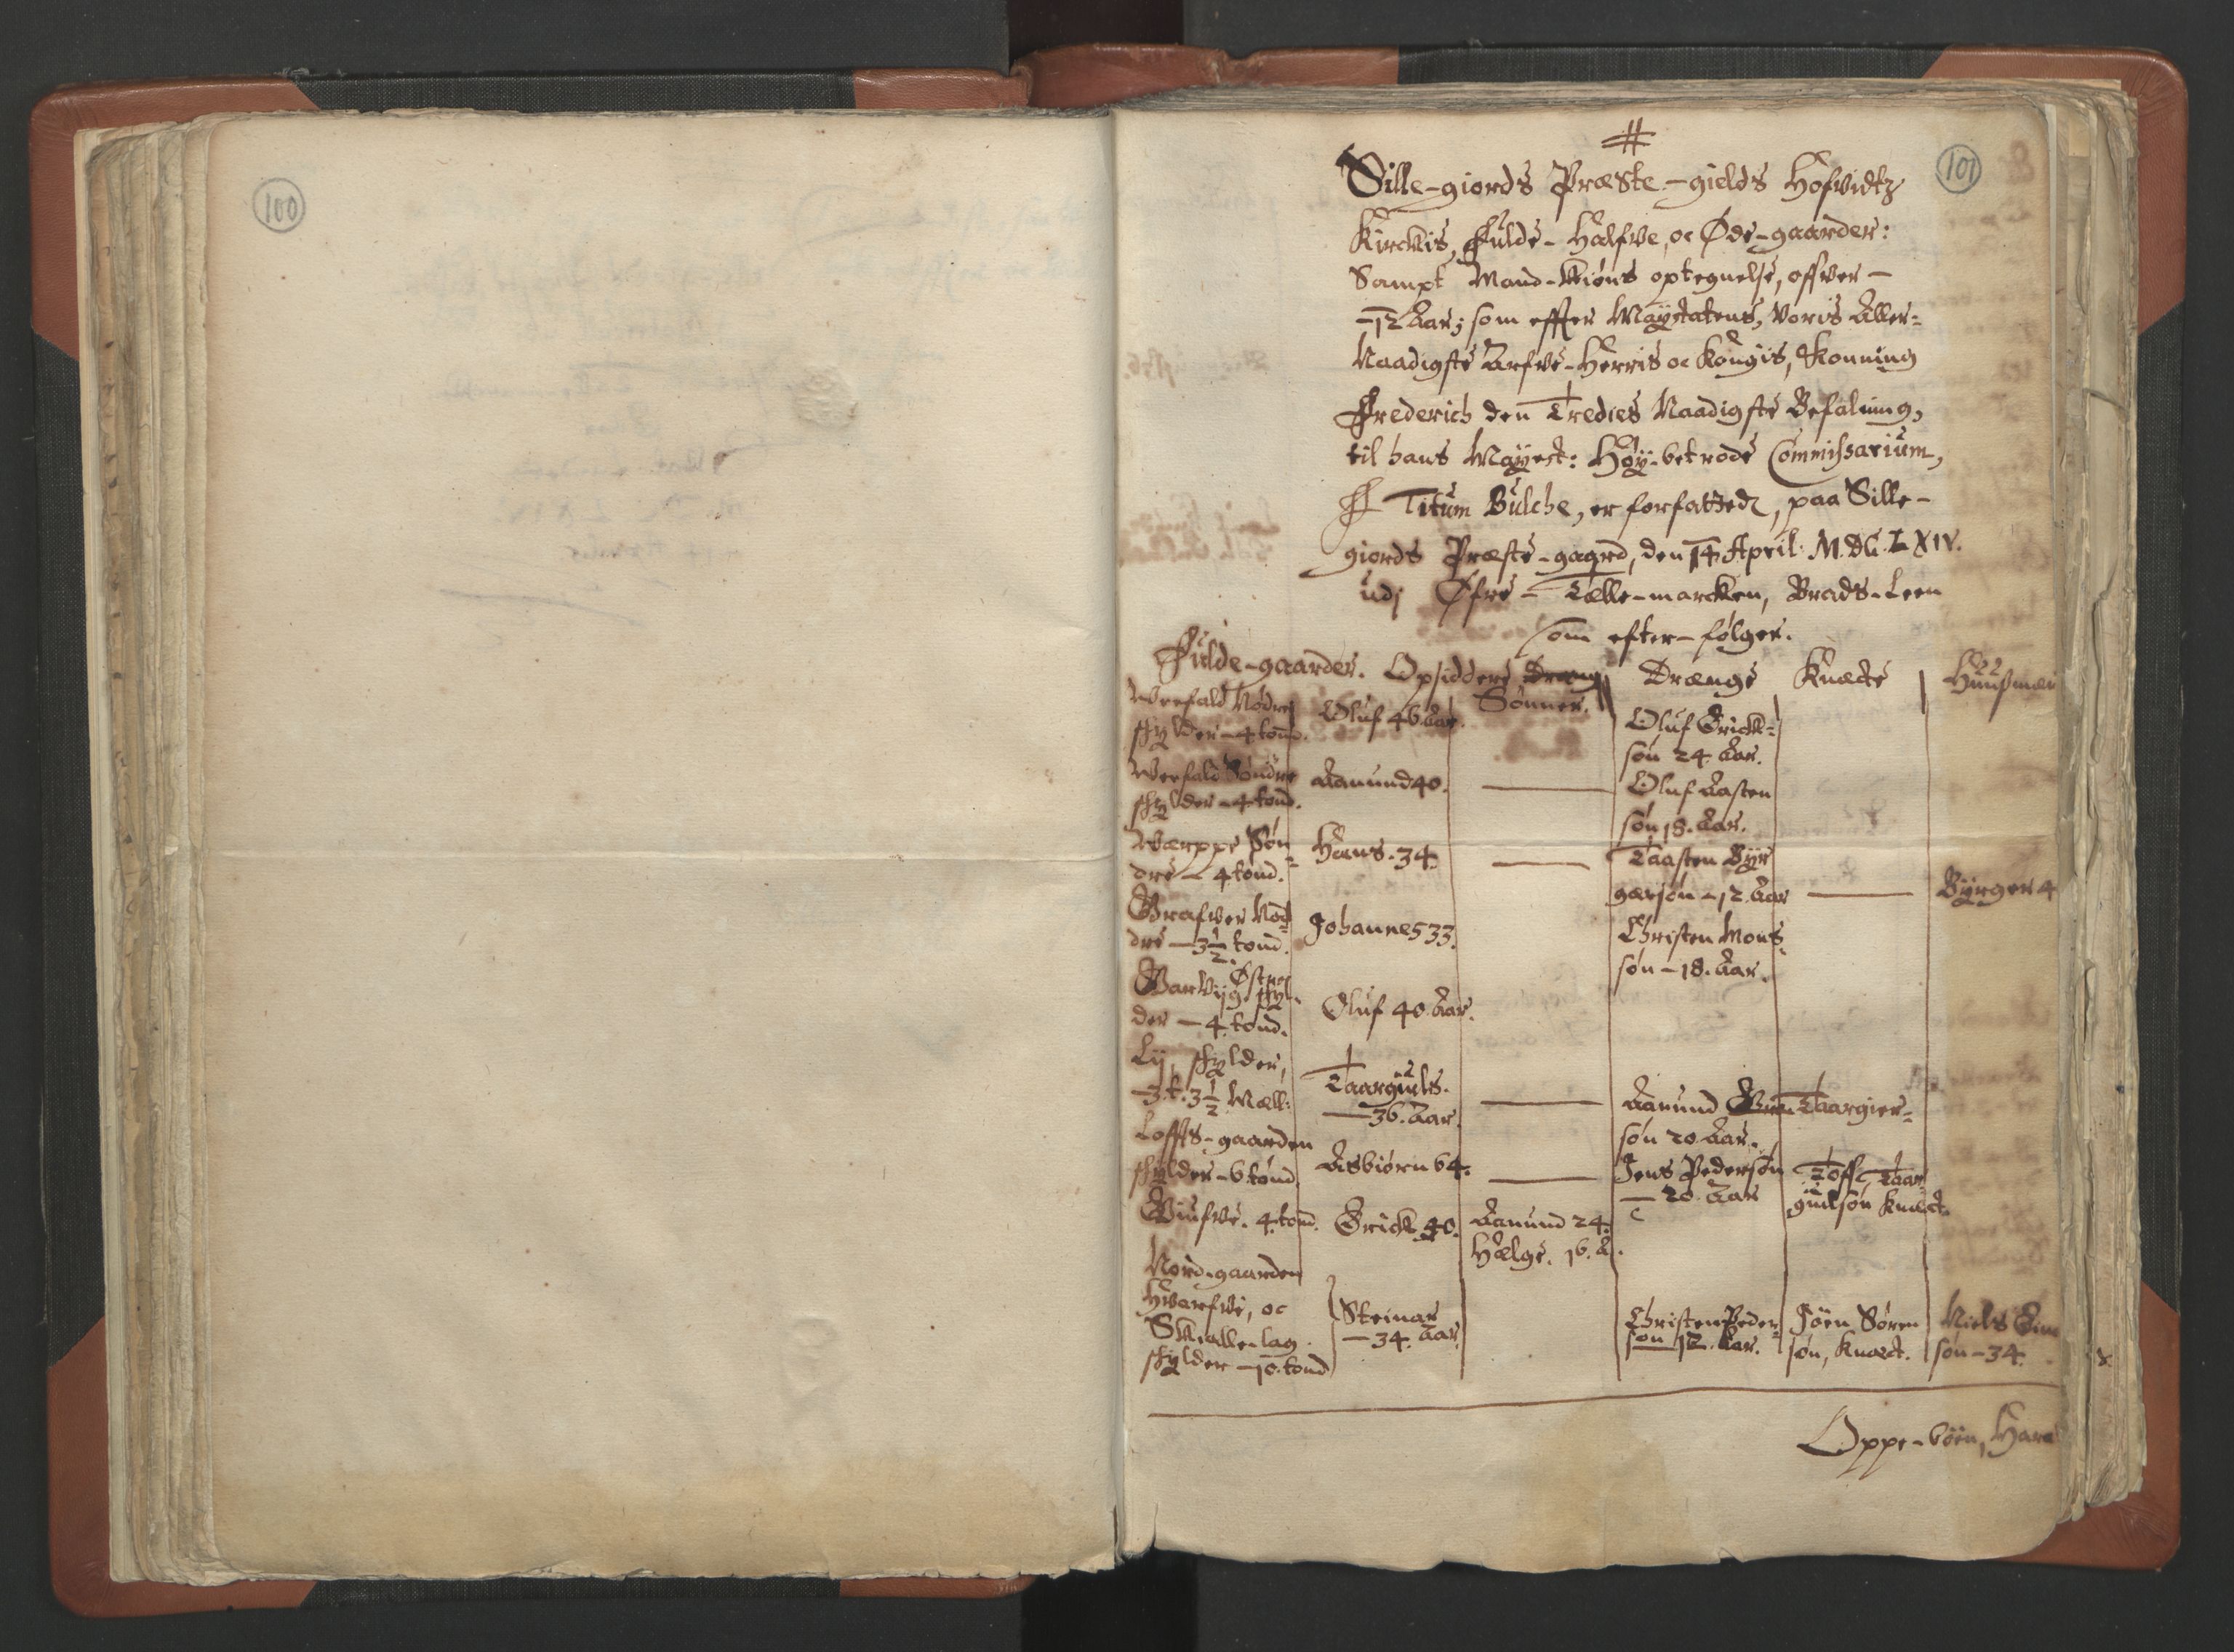 RA, Vicar's Census 1664-1666, no. 12: Øvre Telemark deanery, Nedre Telemark deanery and Bamble deanery, 1664-1666, p. 100-101